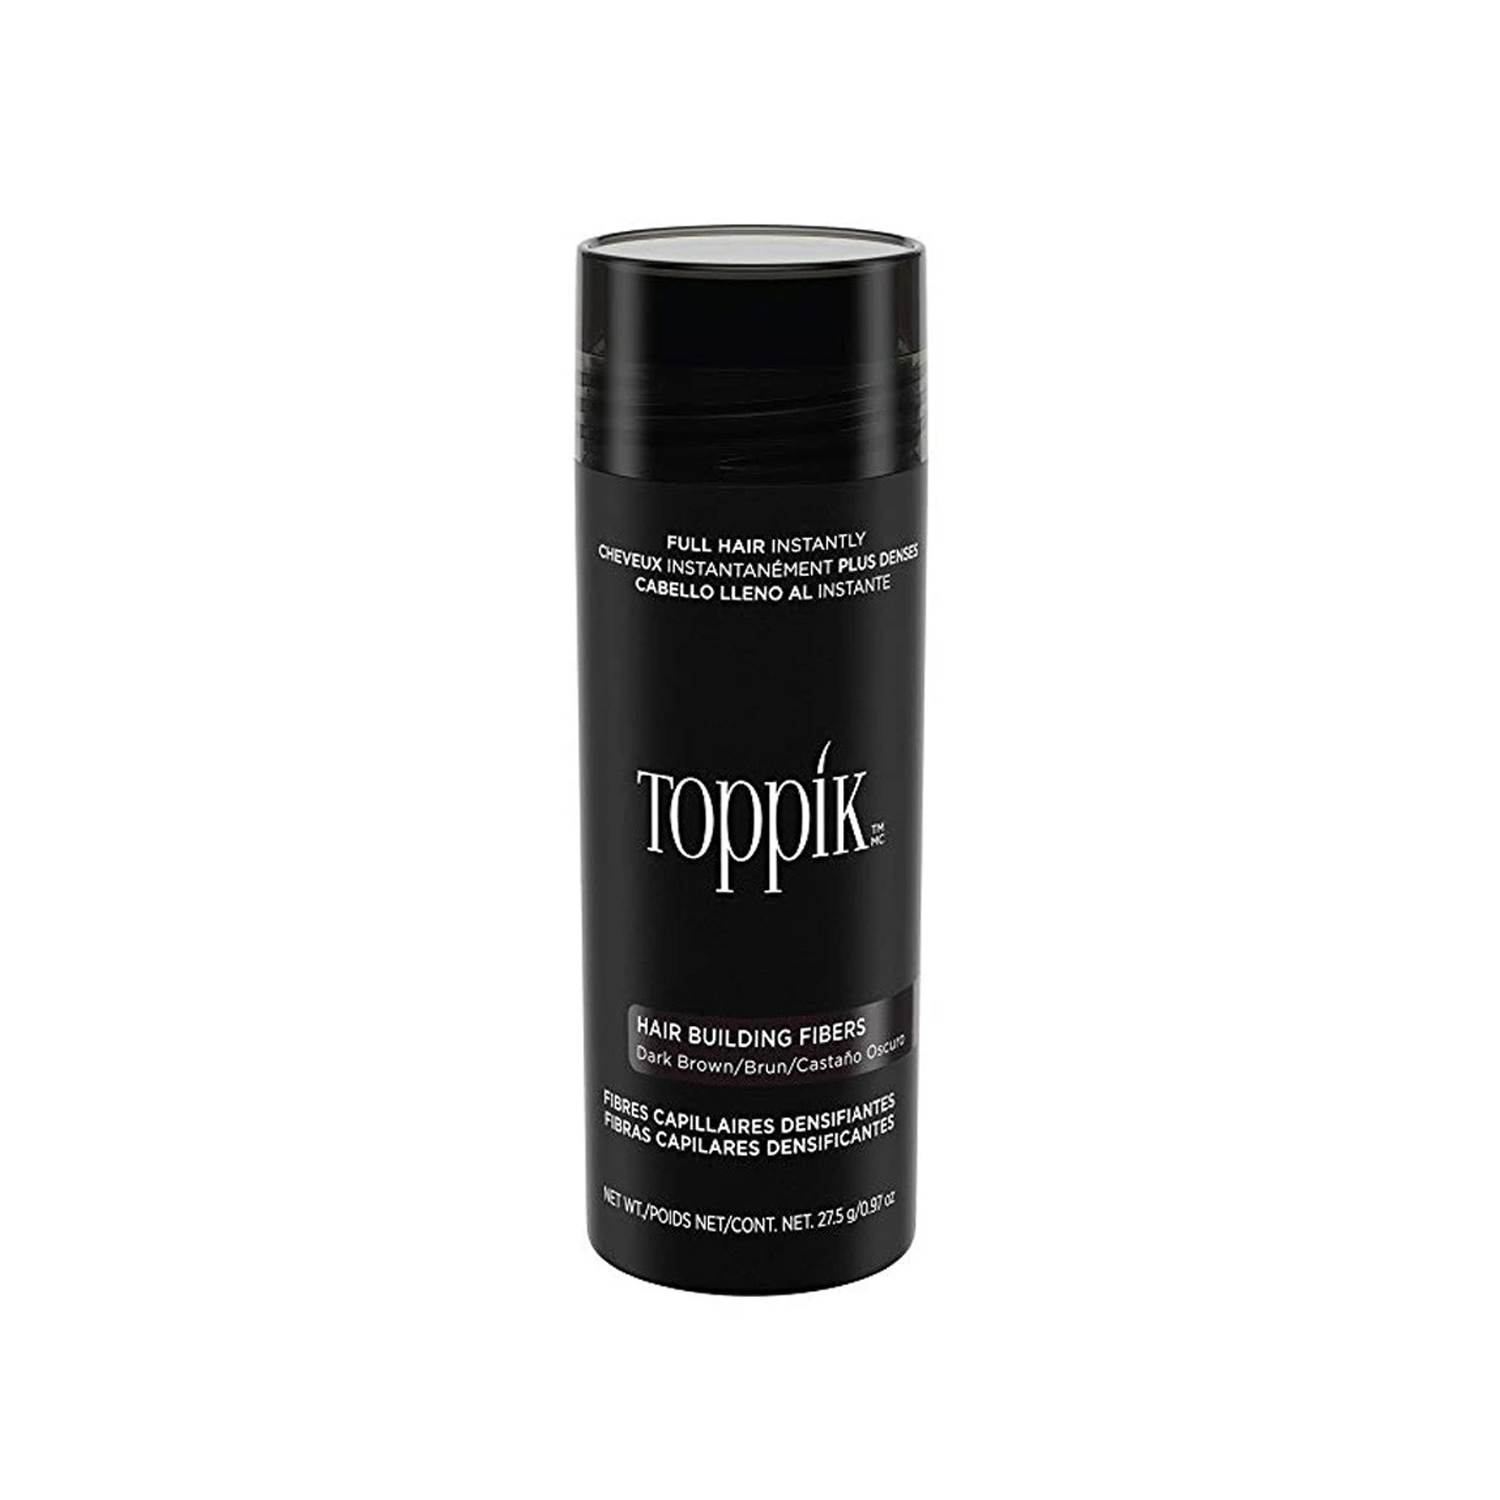 Toppik Hair Building Fibers Black 27.5Mg - Premium Health & Beauty from Toppik - Just Rs 9210.00! Shop now at Cozmetica